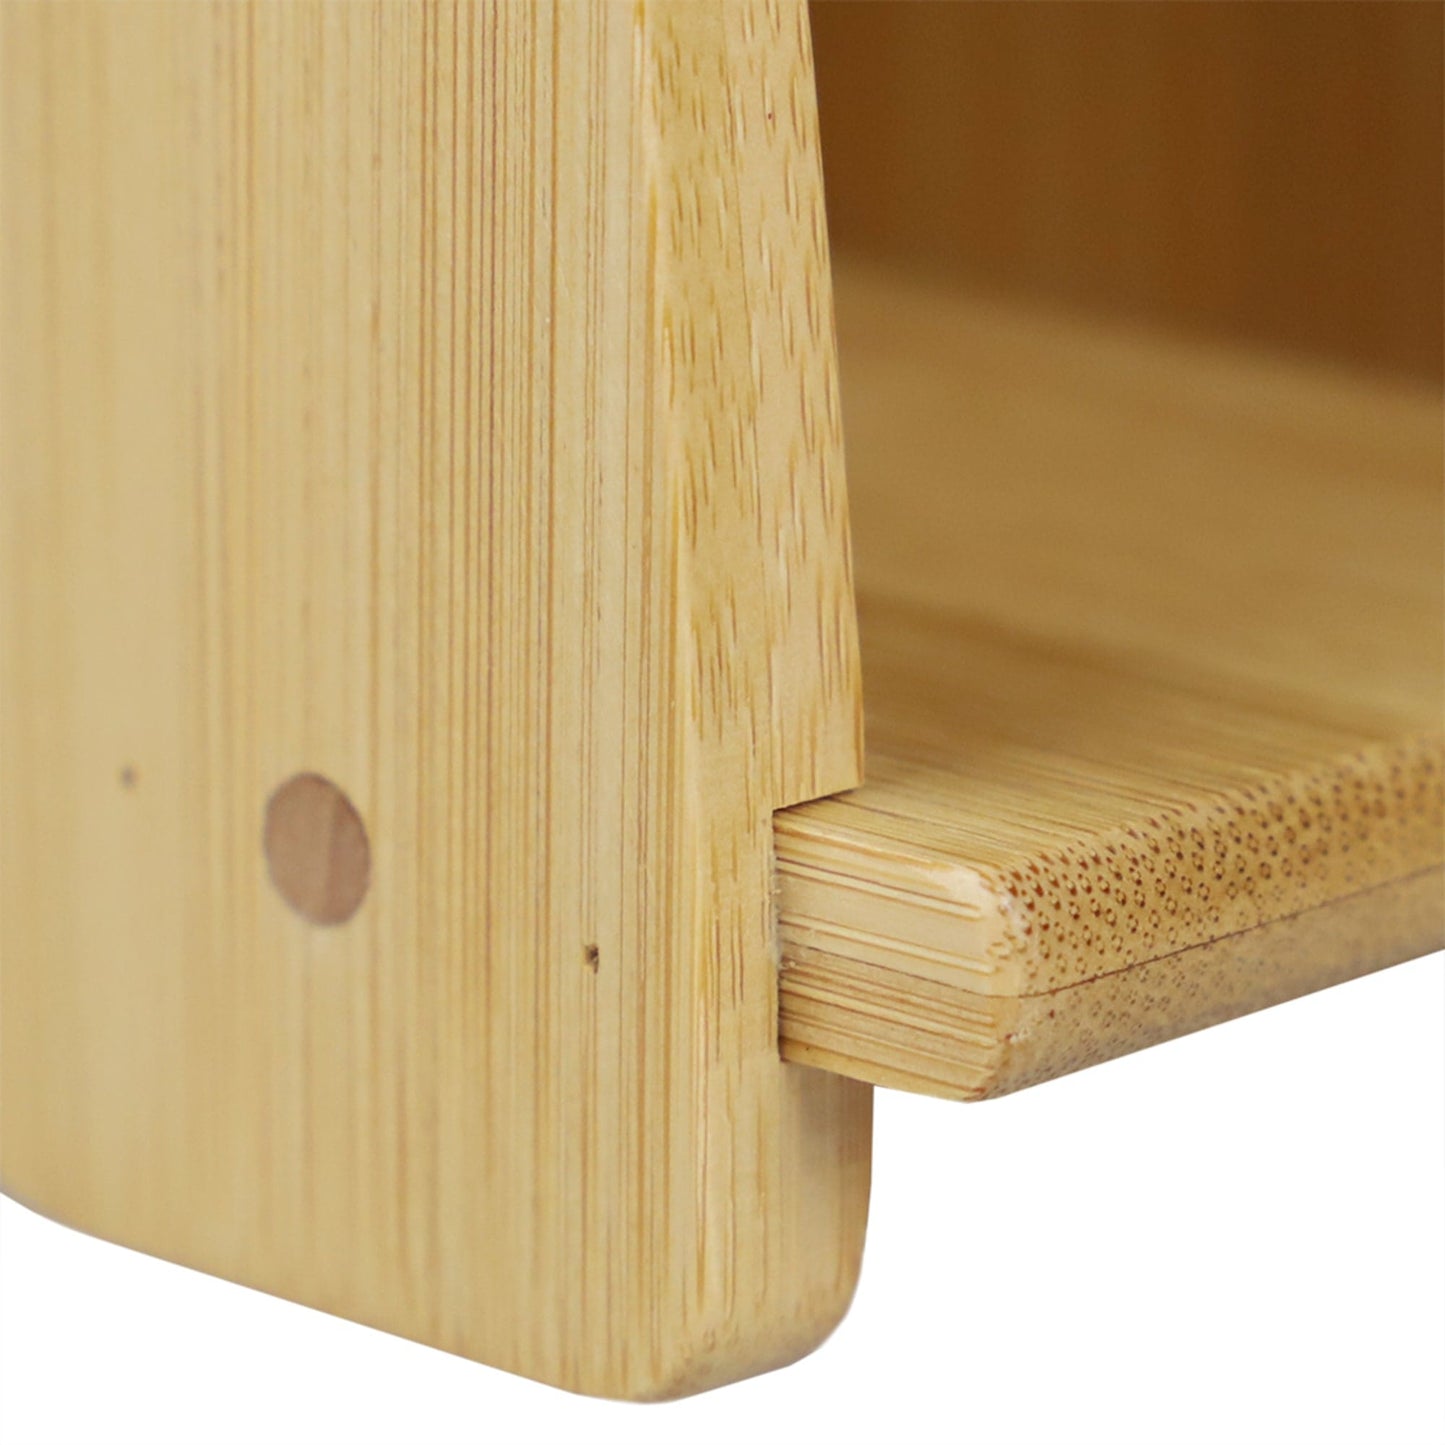 Michael Graves Design Triangle Freestanding Upright Bamboo Napkin Holder, Natural